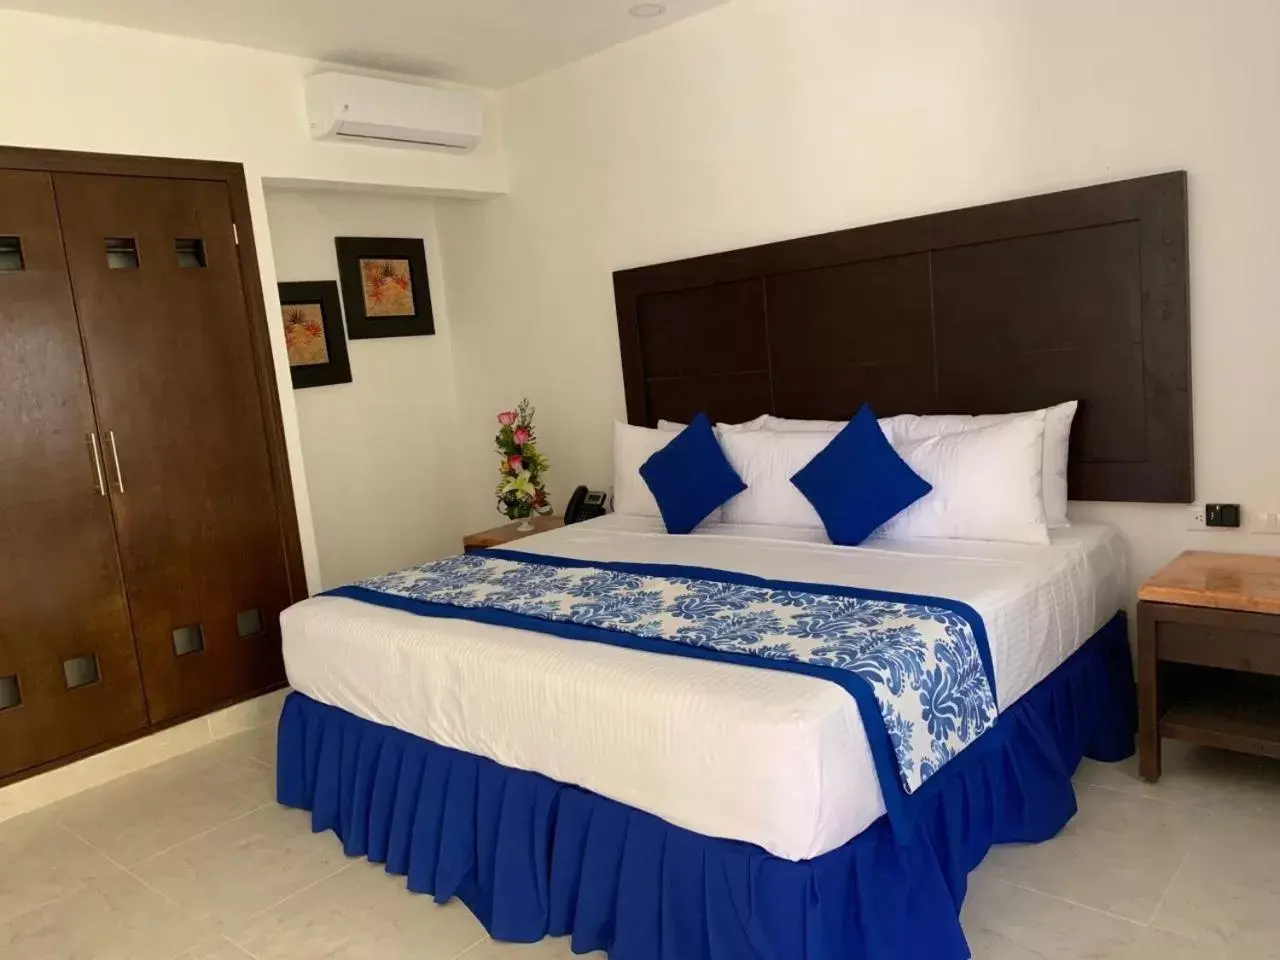 Bed in Hotel Catedral Valladolid Yucatan